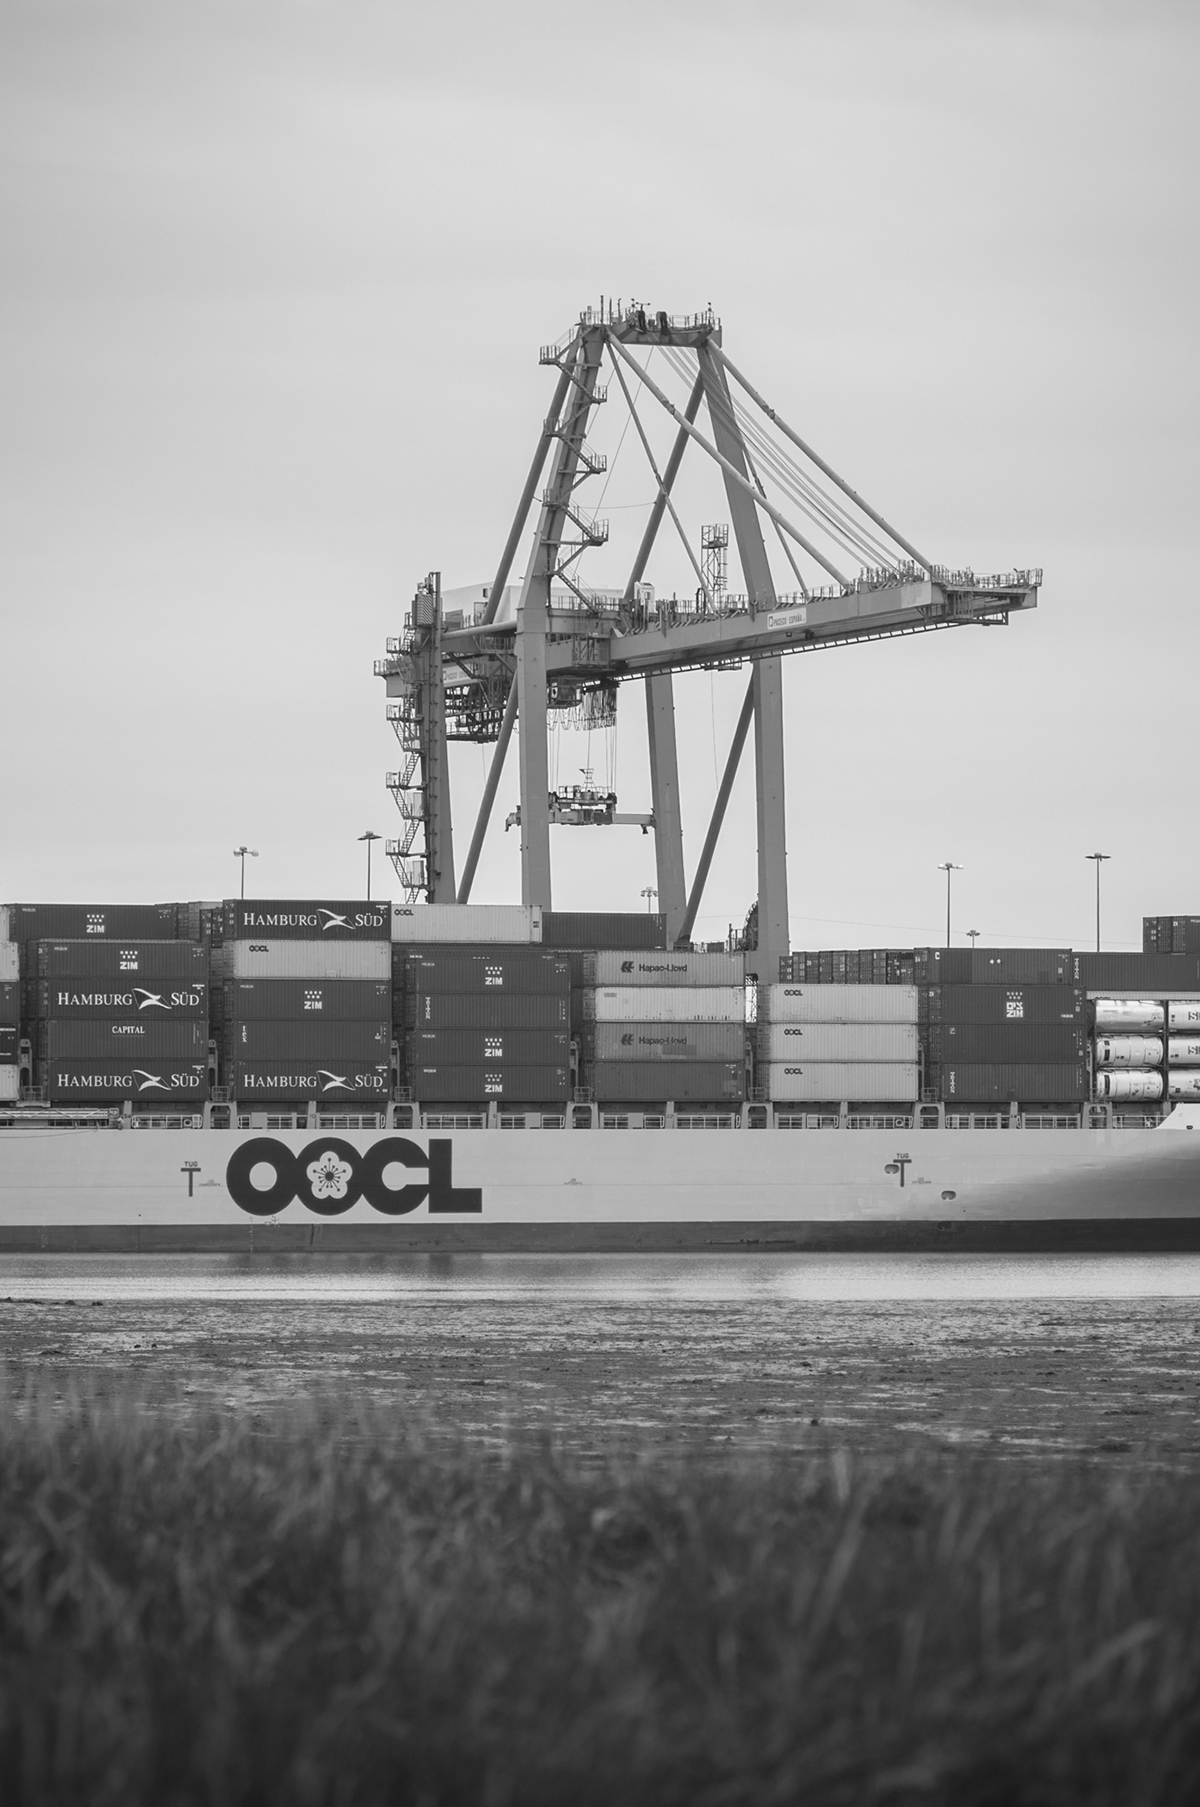 docks container ships shipping Estuary Coast port trade